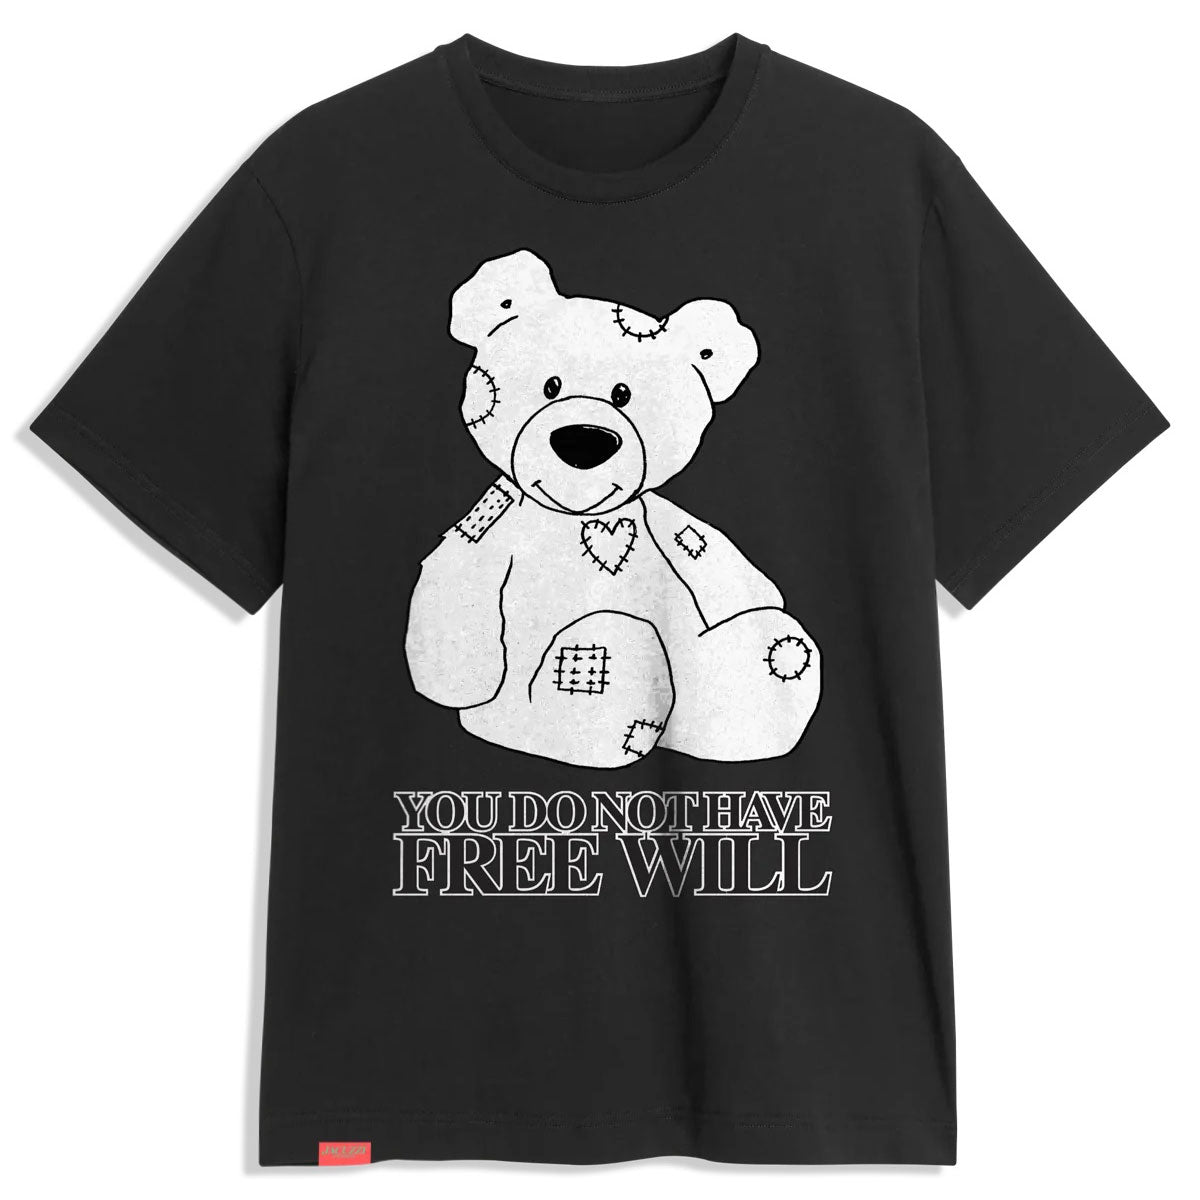 Jacuzzi Free Will Premium T-Shirt - Black image 1